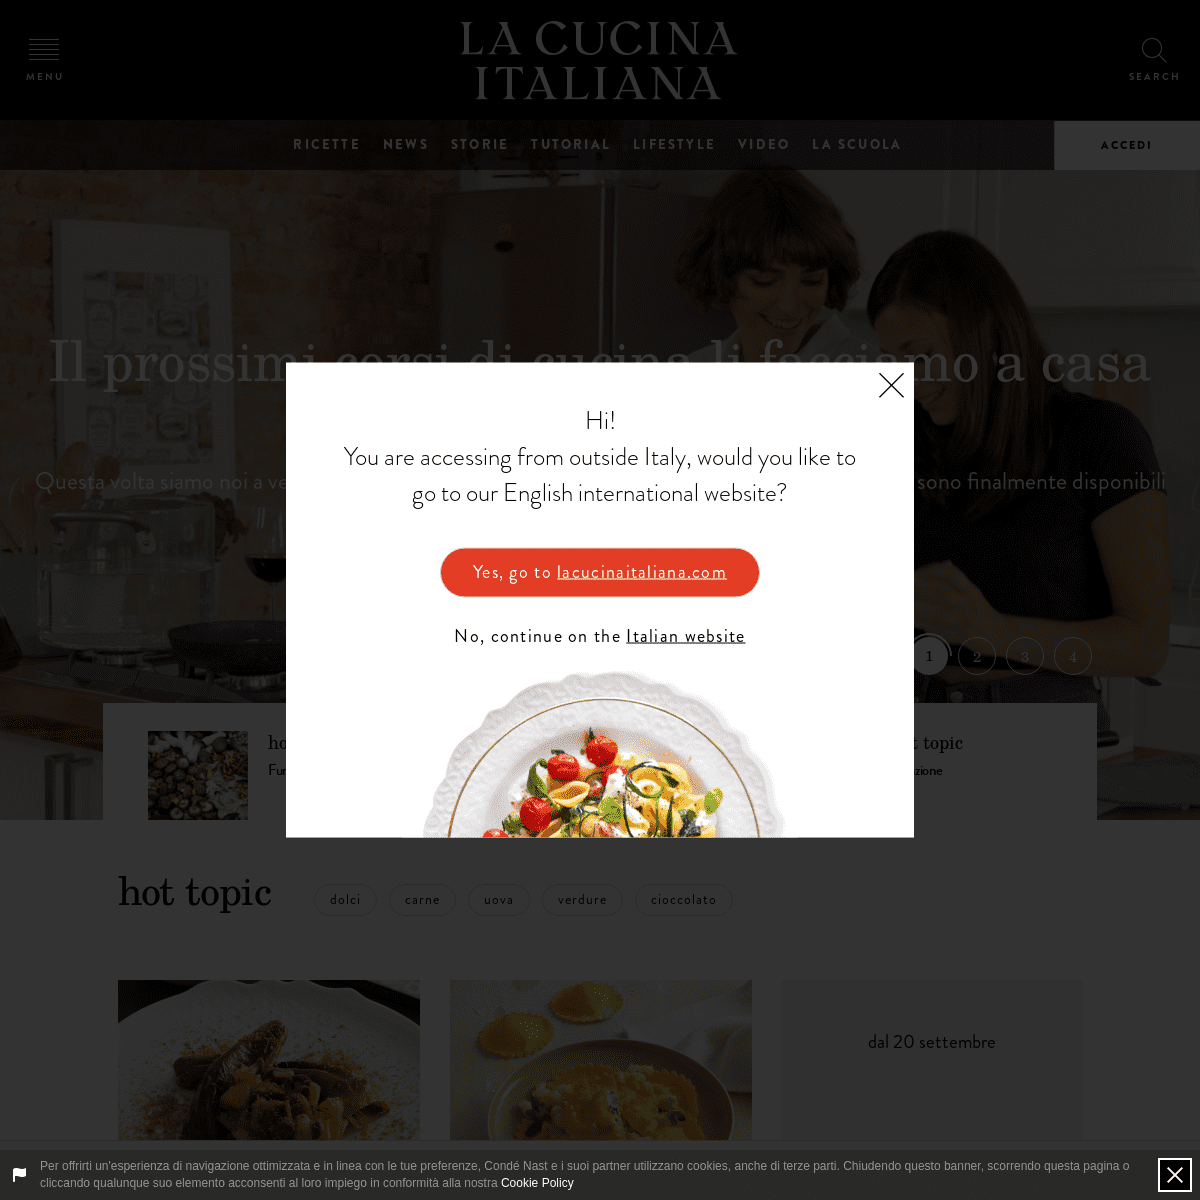 La Cucina Italiana: ricette, news, chef, storie in cucina - LaCucinaItaliana.it